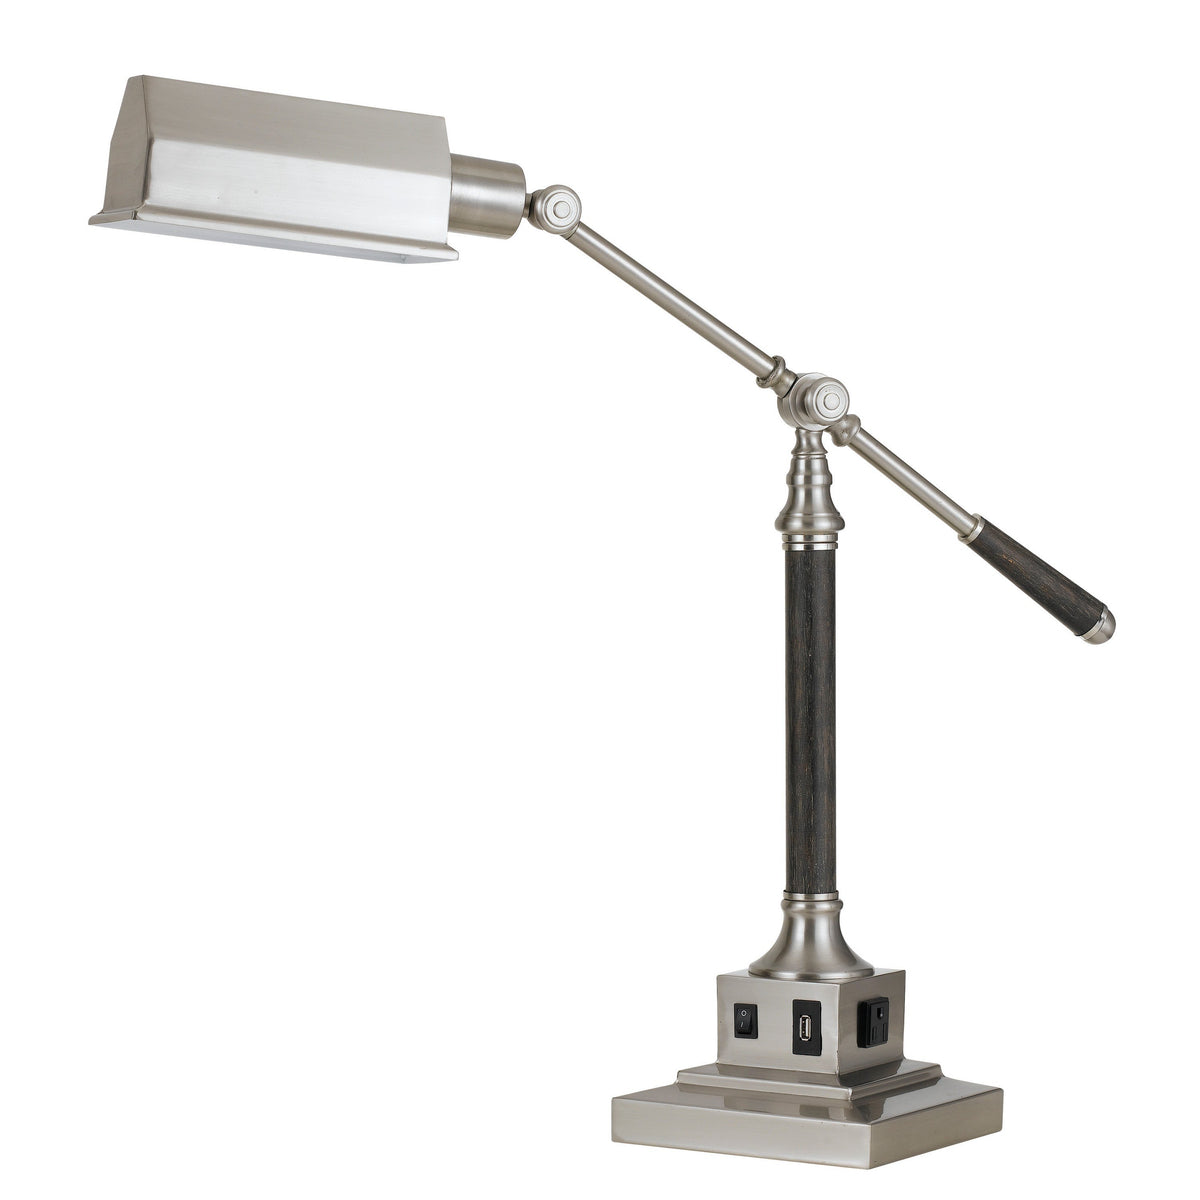 60 Watt Metal Desk Lamp with Adjustable Arm and Head, Silver - BM224879